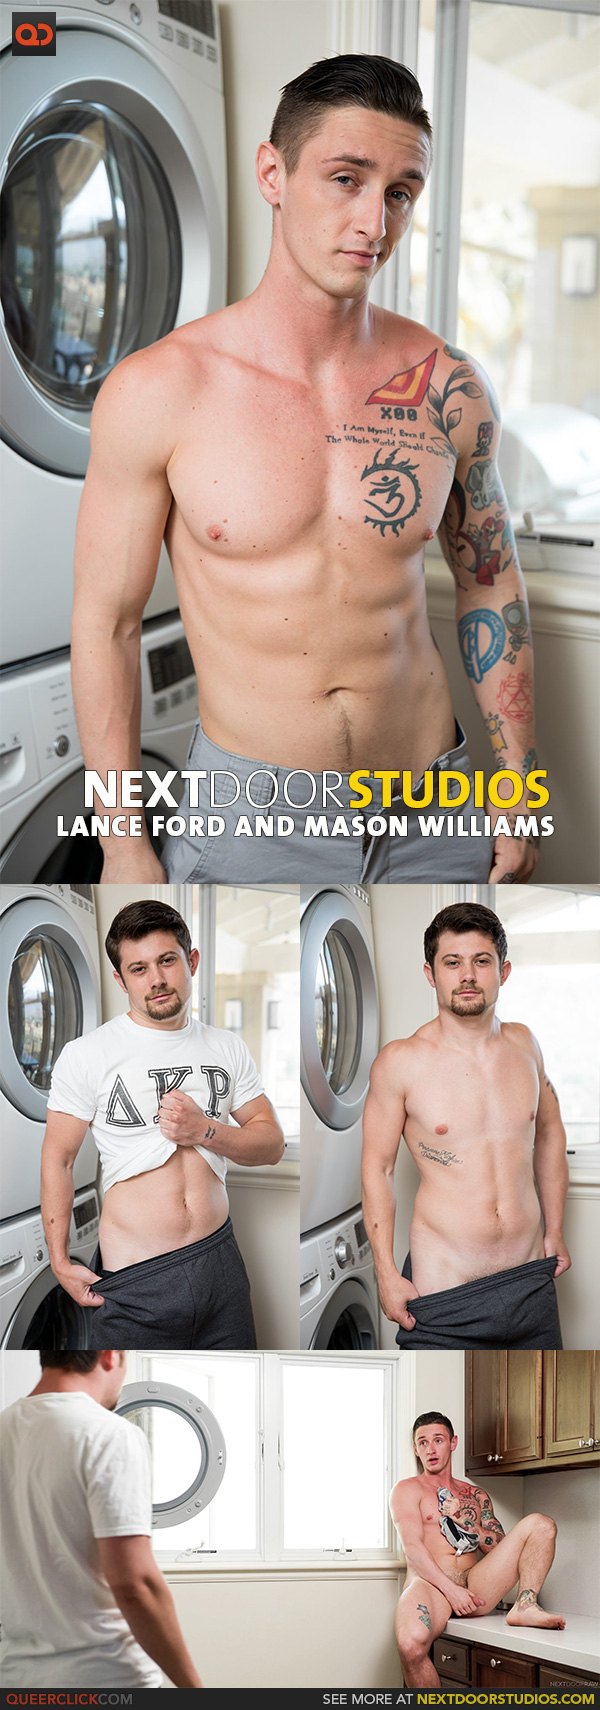 Next Door Studios: Lance Ford and Mason Williams